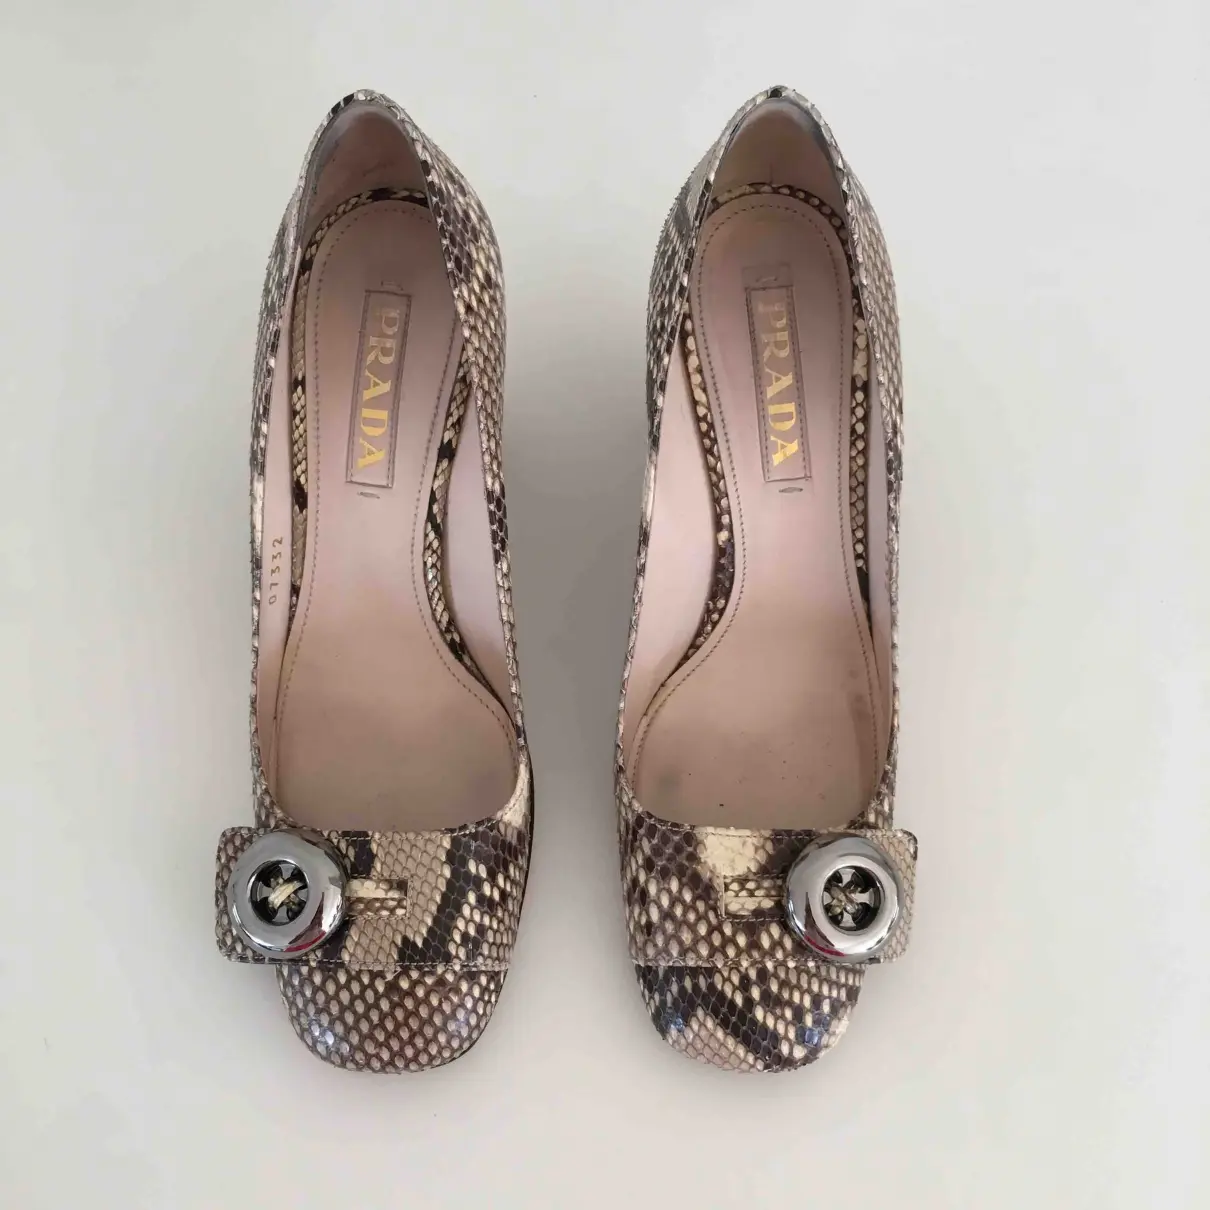 Prada Python heels for sale